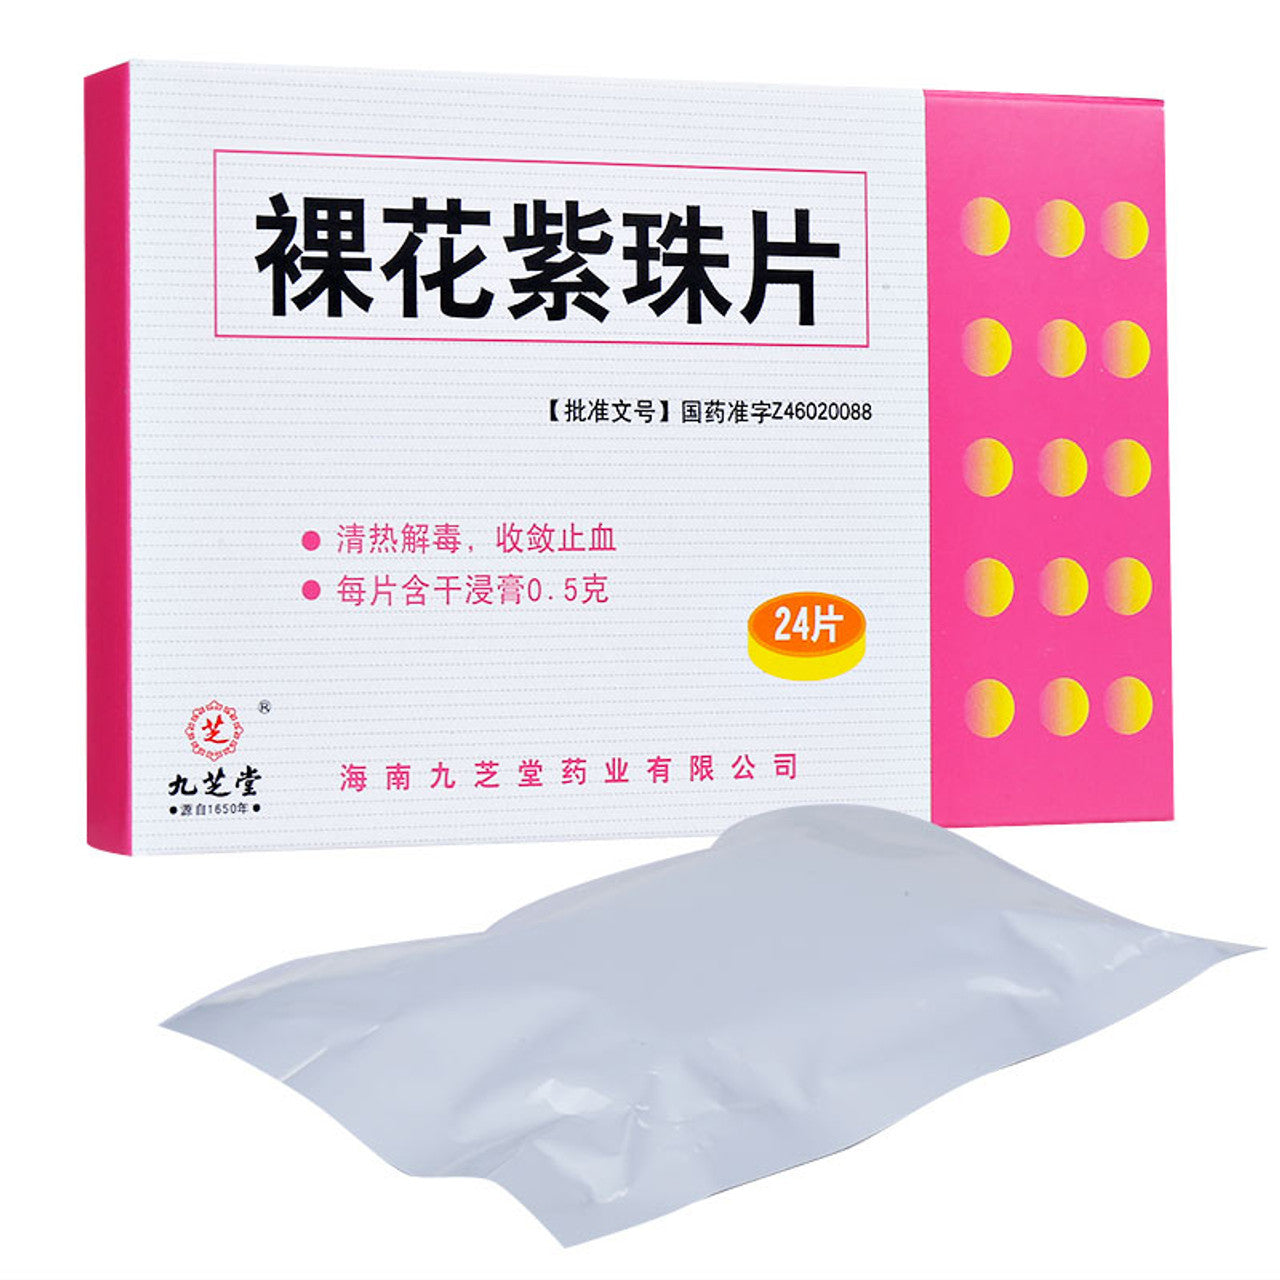 (24 Tablets*5 boxes). Luo Hua Zi Zhu Pian For Hepatitis